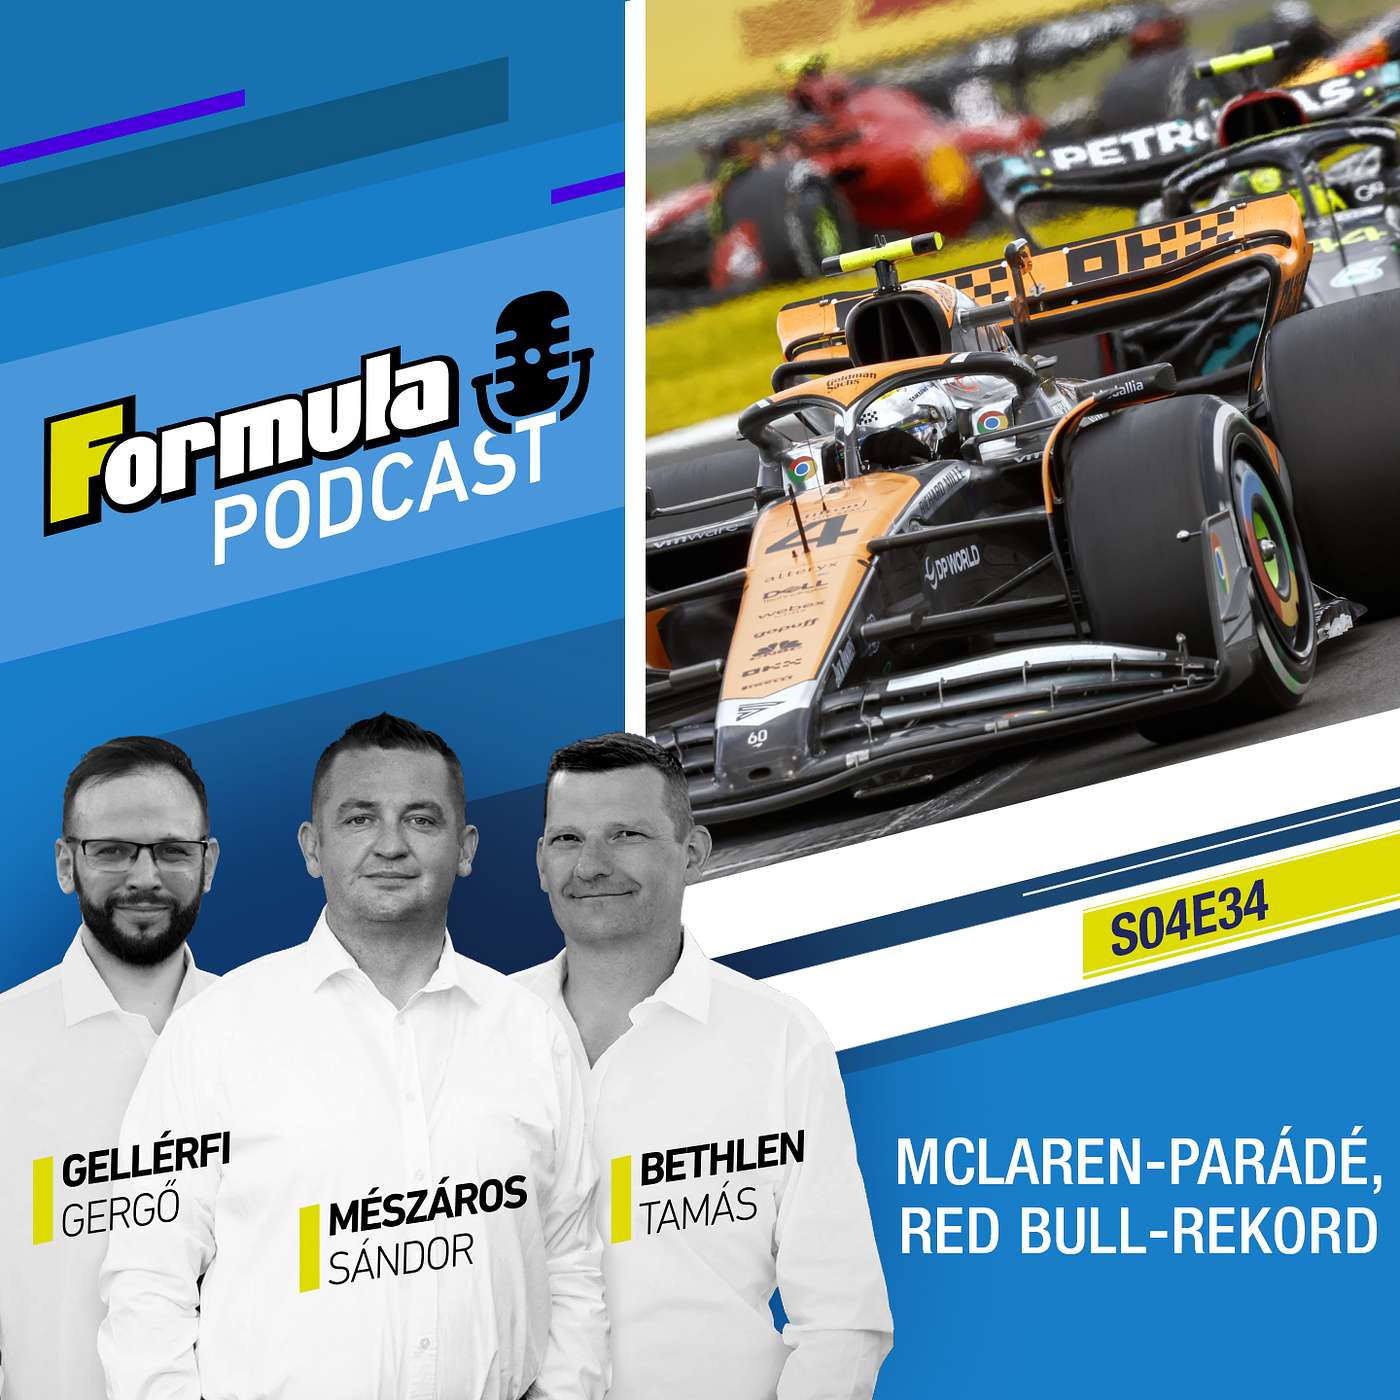 S04EP34 – McLaren-parádé, Red Bull-rekord